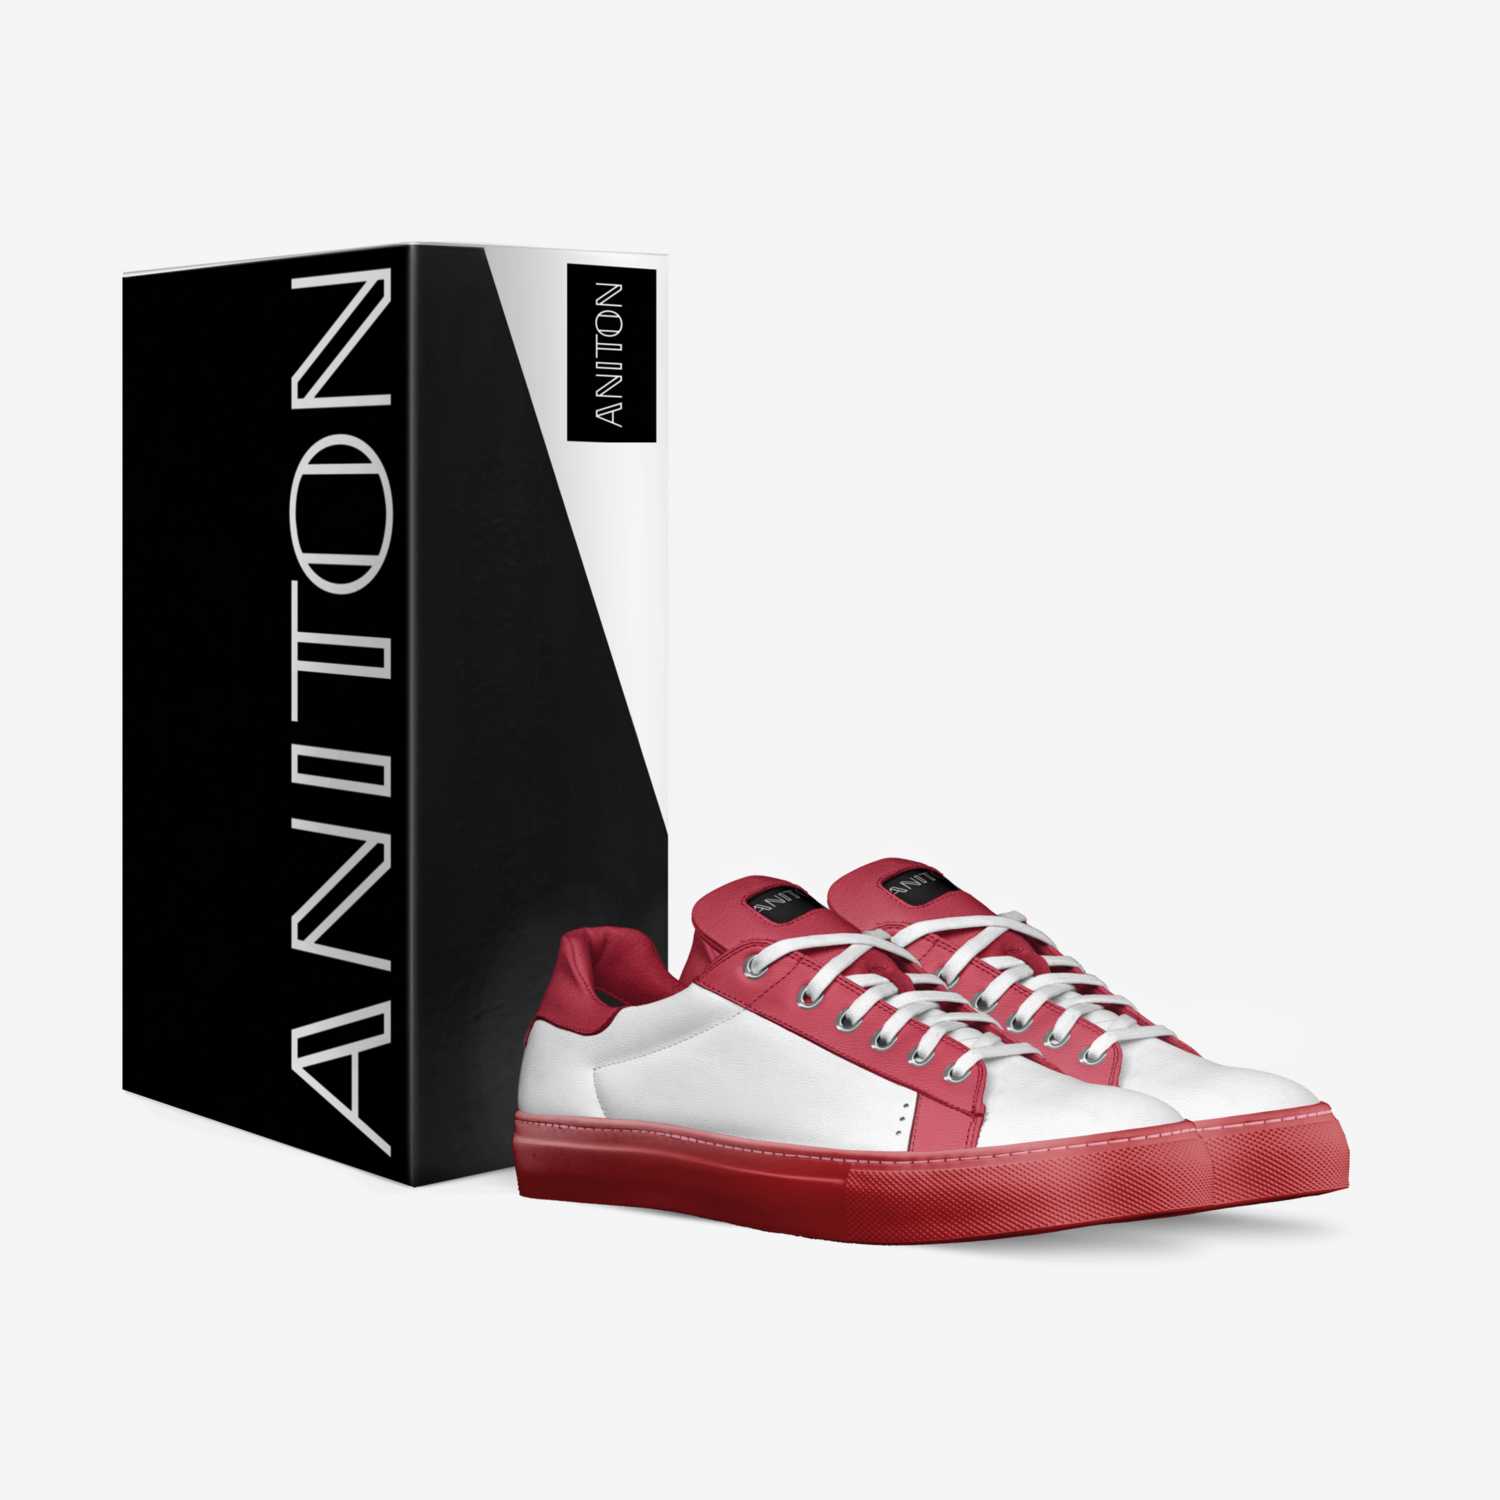 Aniton Bouagga custom made in Italy shoes by Diego Benavidez | Box view